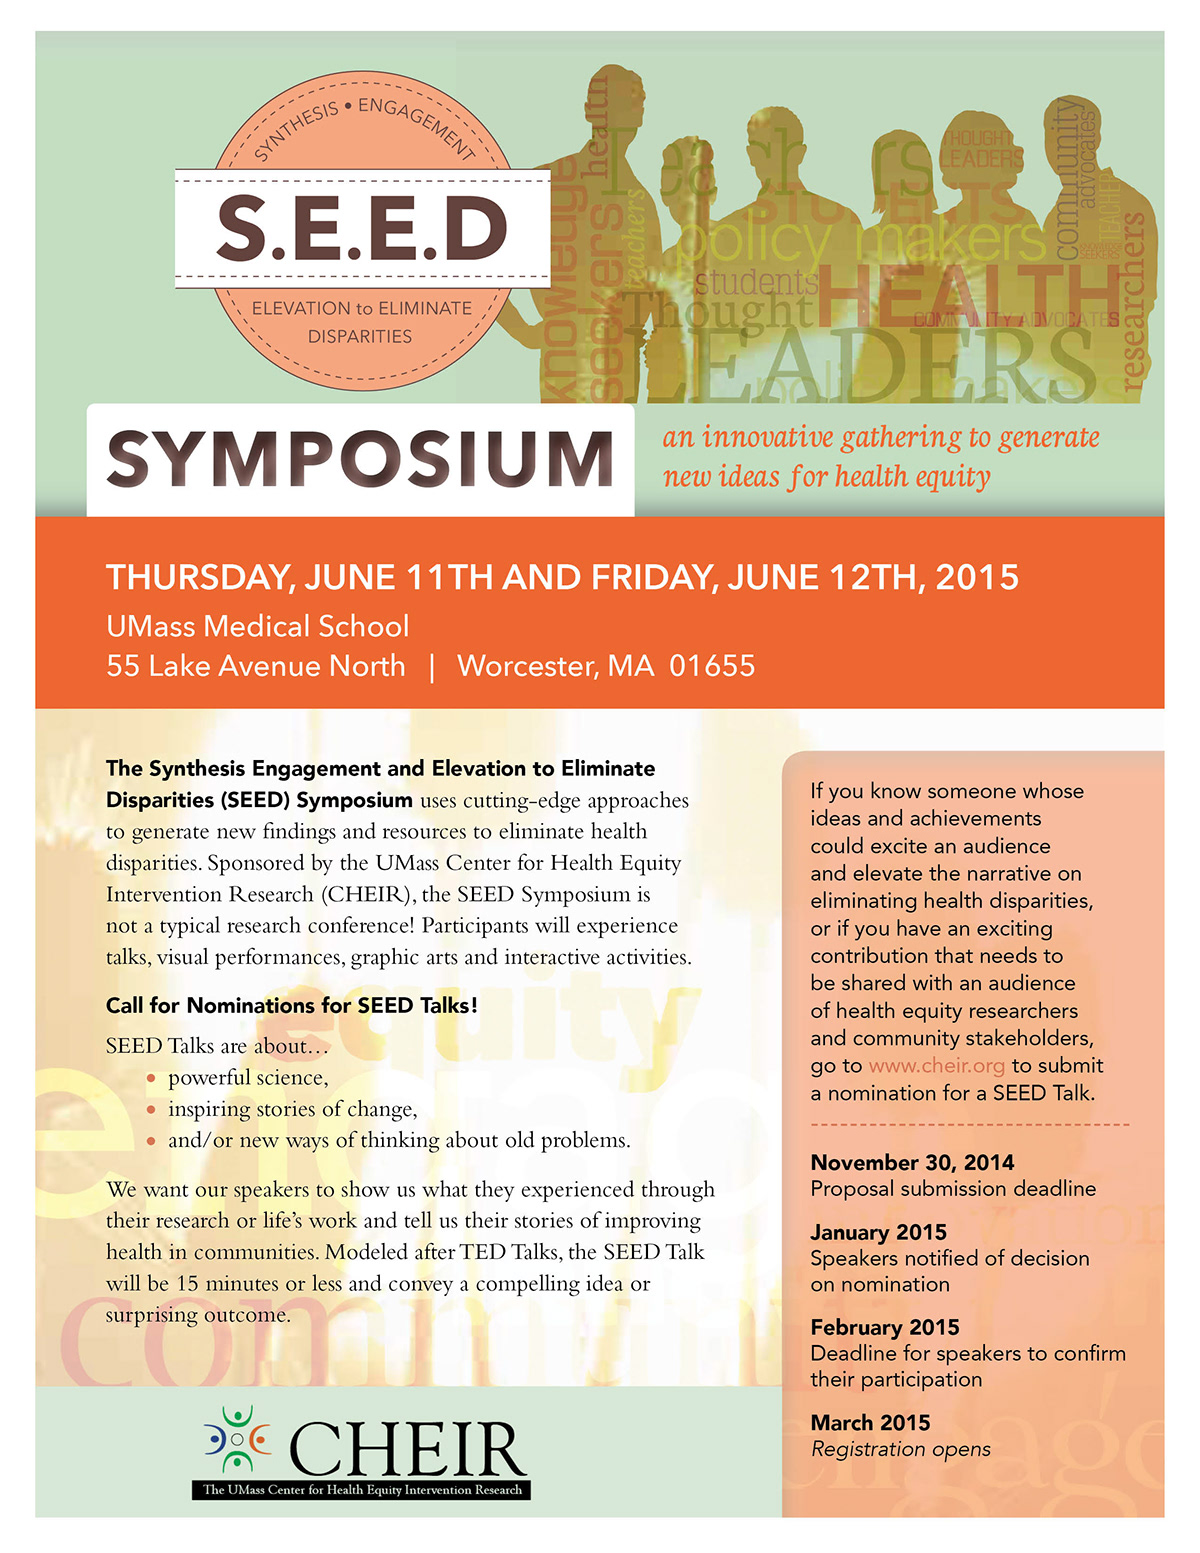 flyer event advertising Not for profit Education seminar symposium social activism